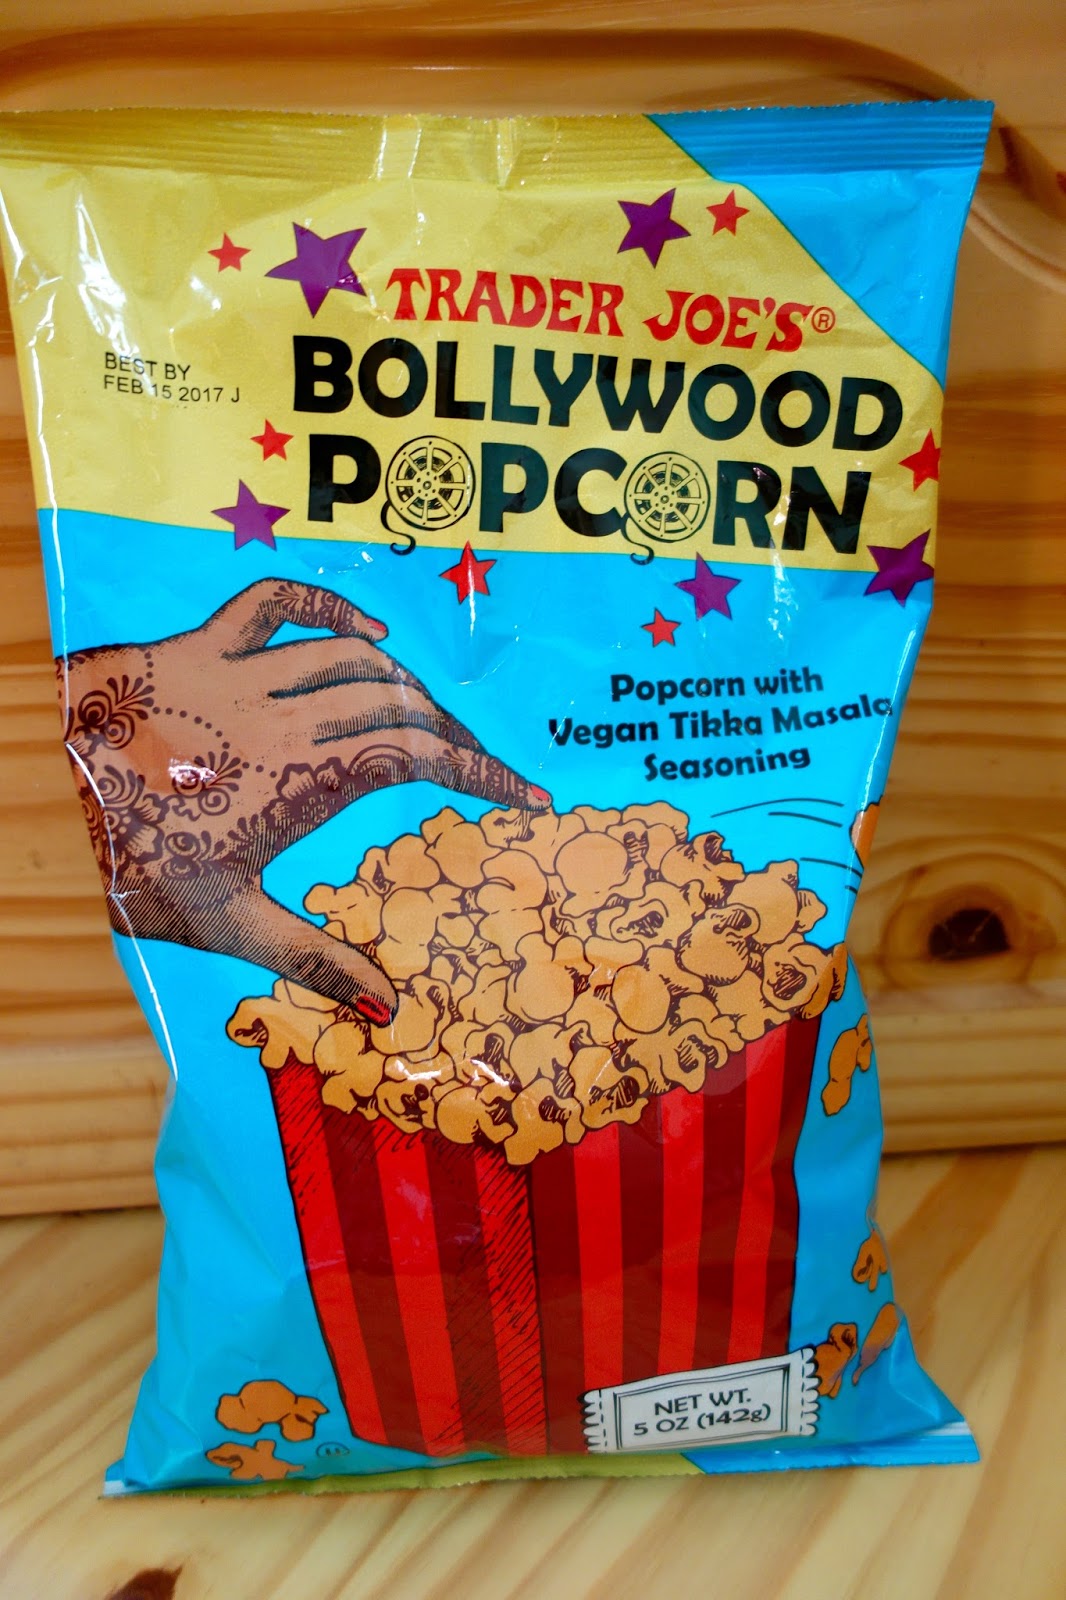 Trader Joe's Bollywood Popcorn